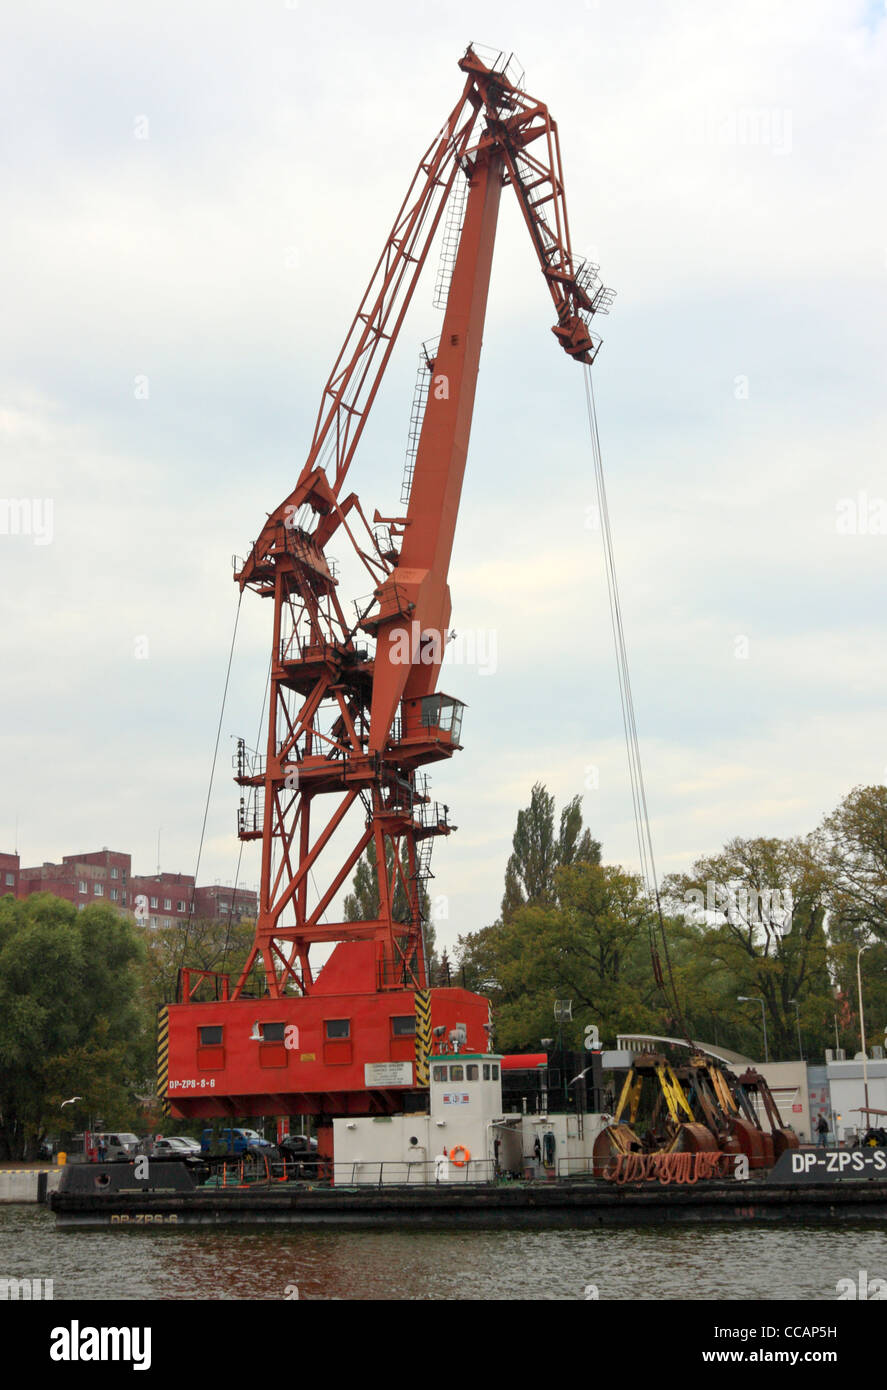 Floating crane in the Port of Swinoujscie, Poland Stock Photo